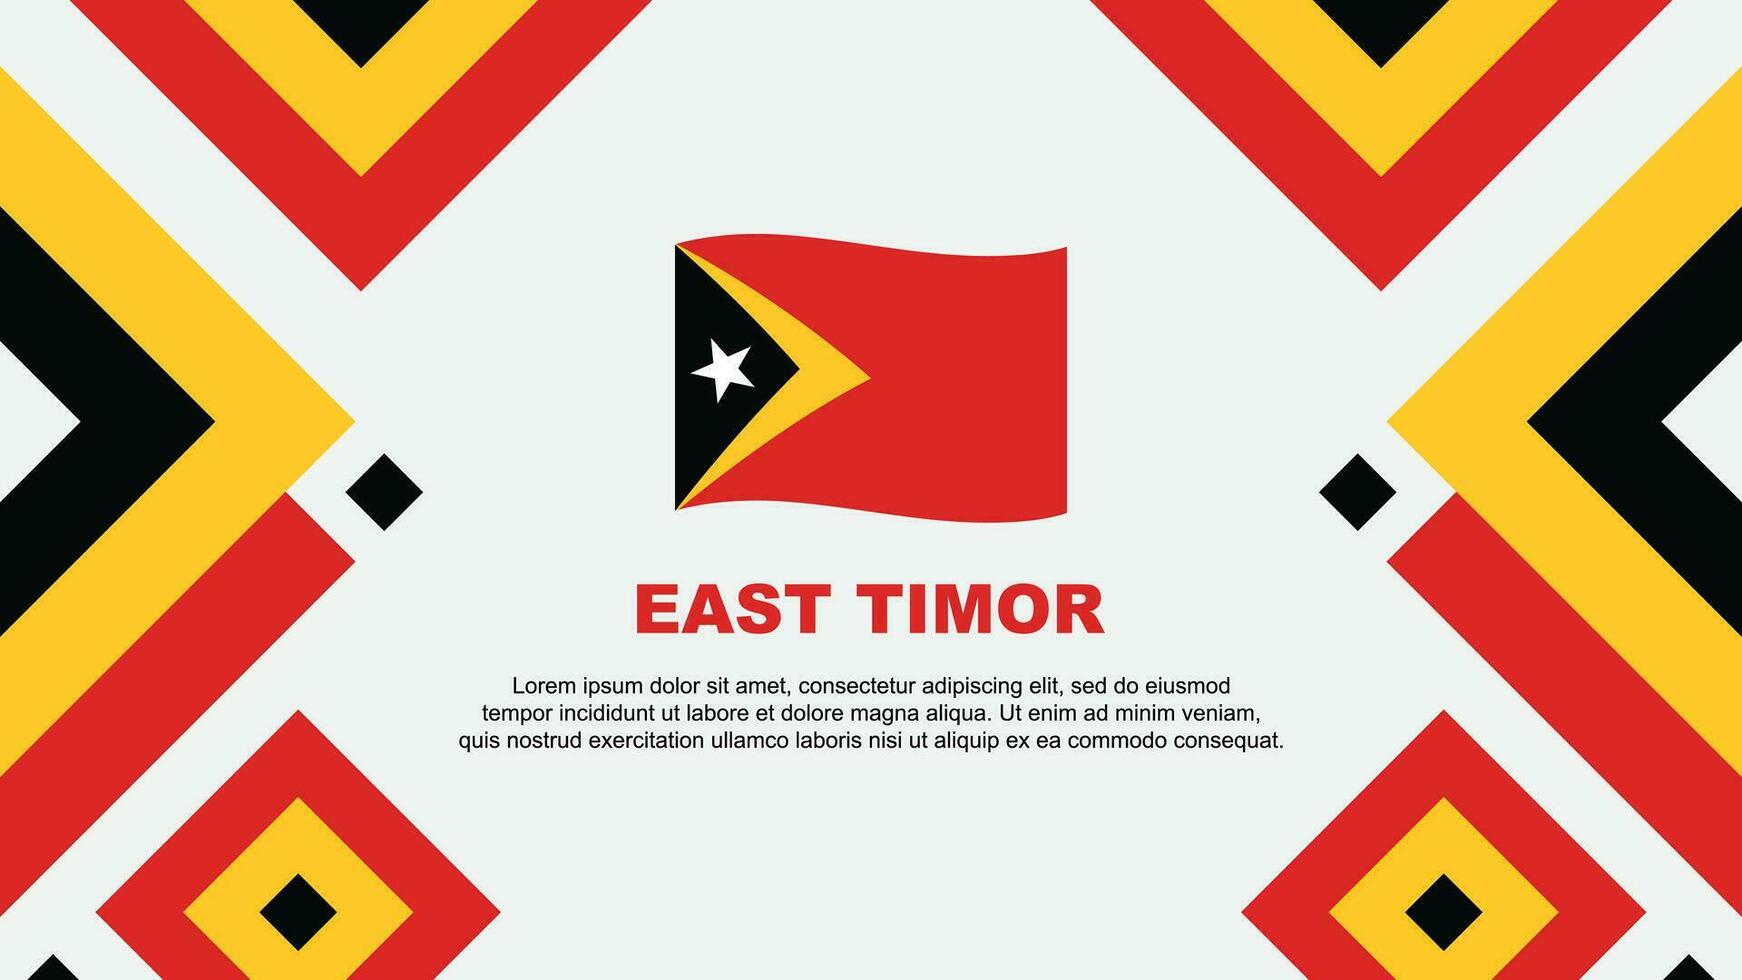 East Timor Flag Abstract Background Design Template. East Timor Independence Day Banner Wallpaper Vector Illustration. East Timor Template